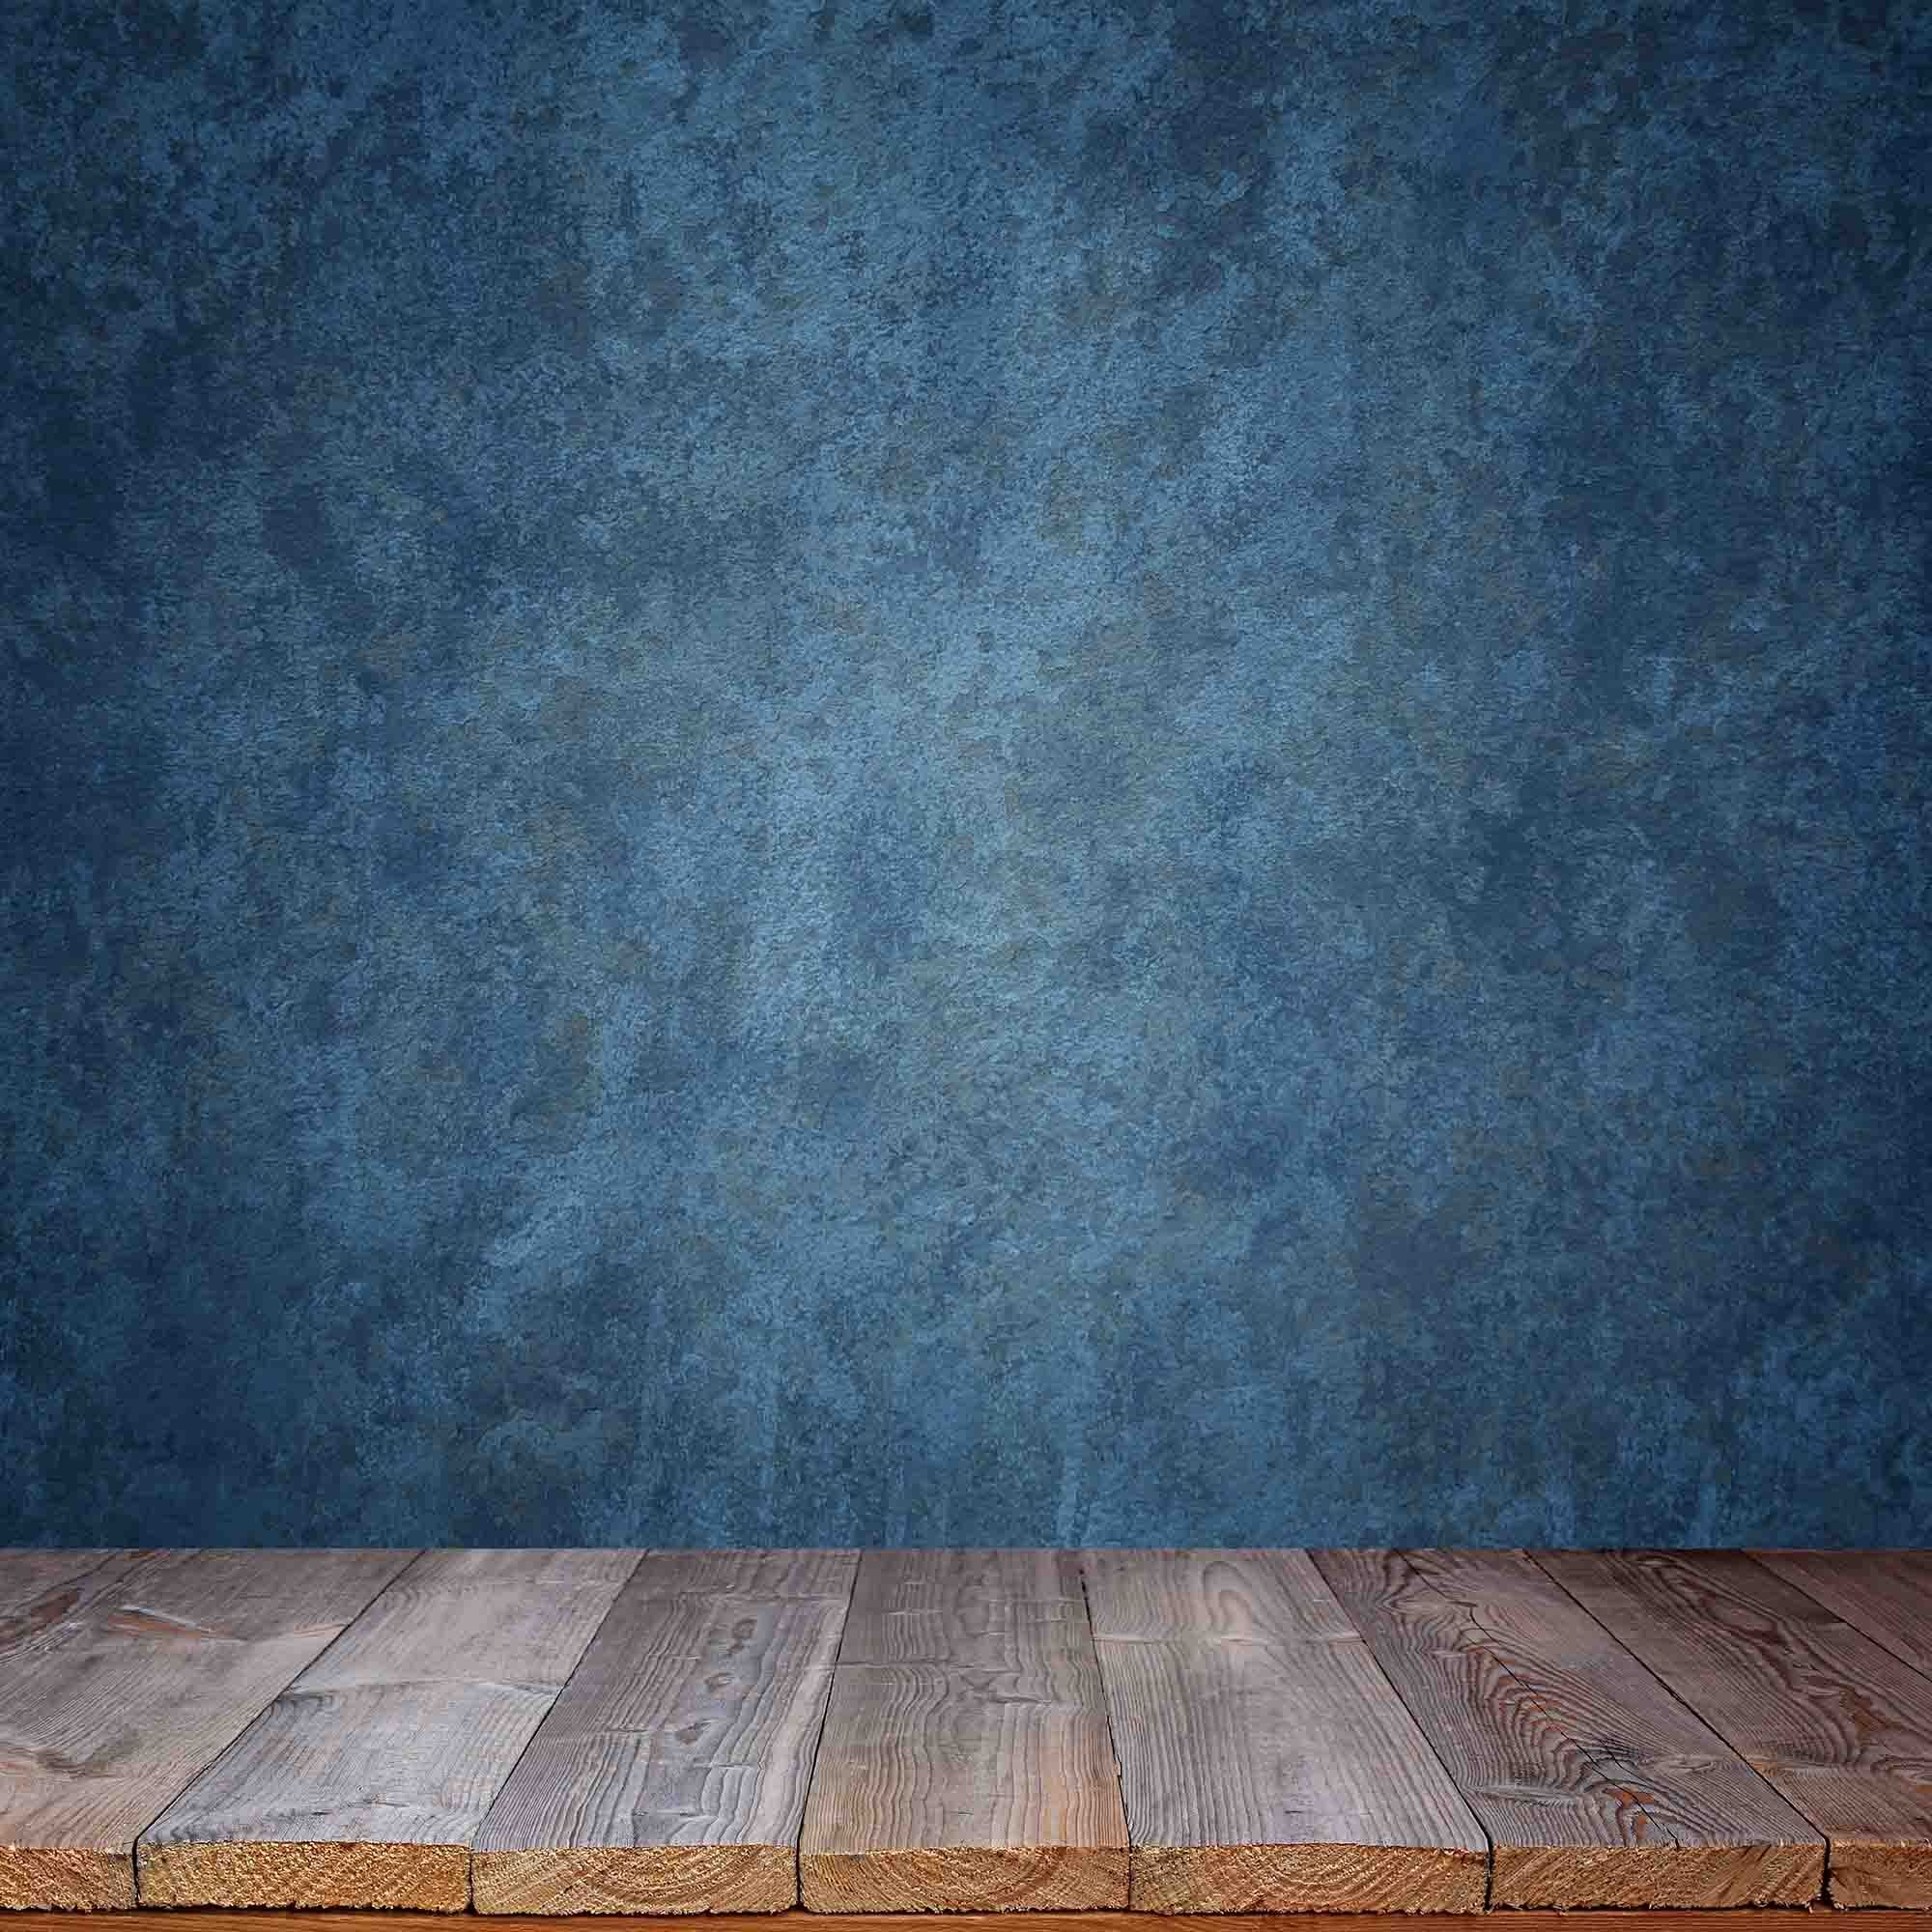 Old Master Marine Blue Background Wall With Wood Floor Backdrop Shopbackdrop